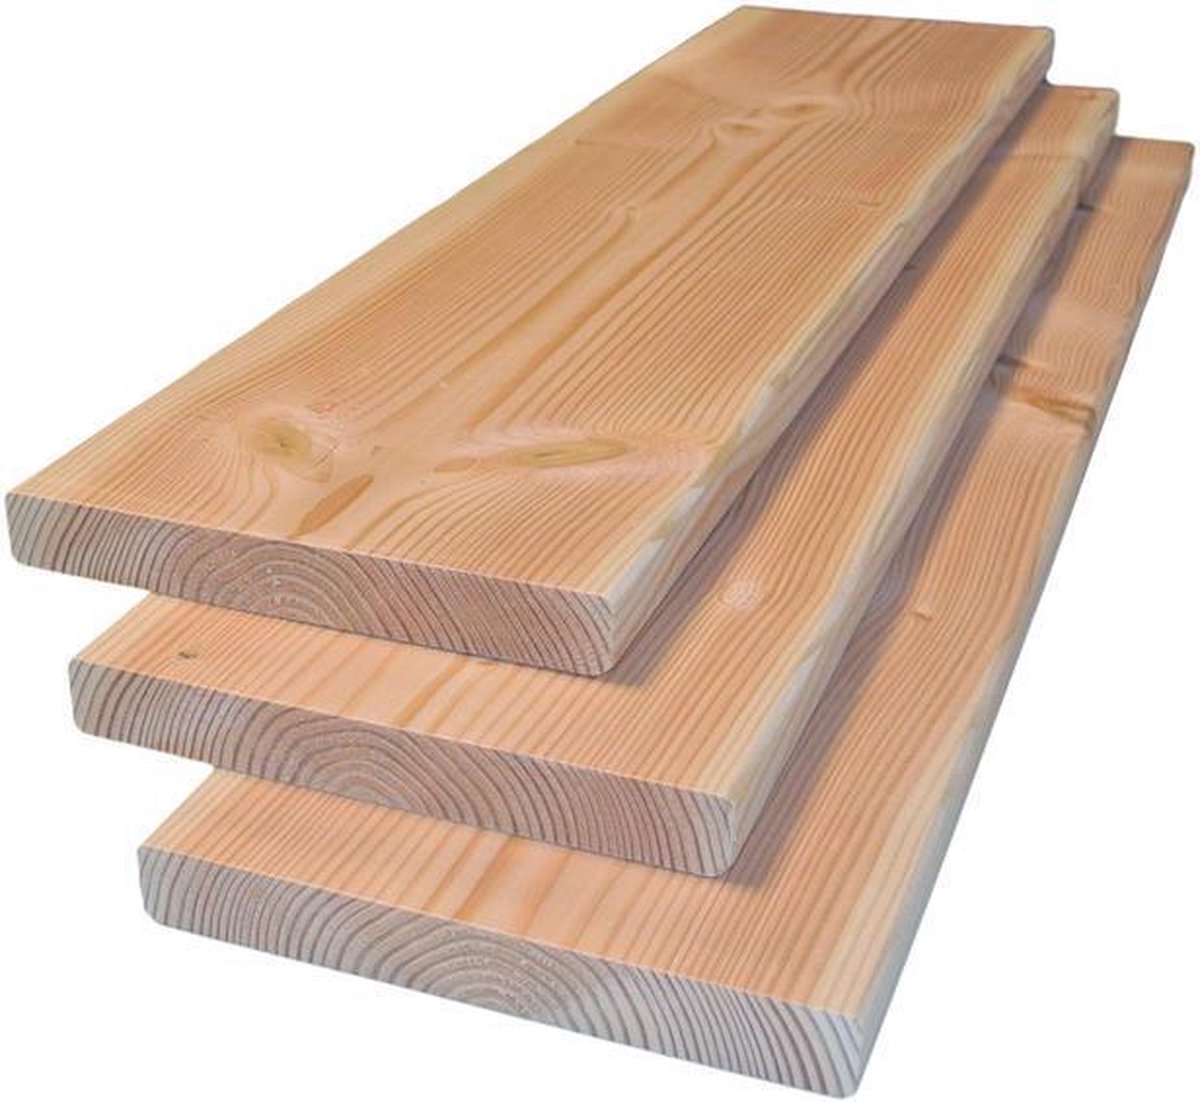 Douglashout plank 100cm | douglas | douglas hout wandplank | douglas...